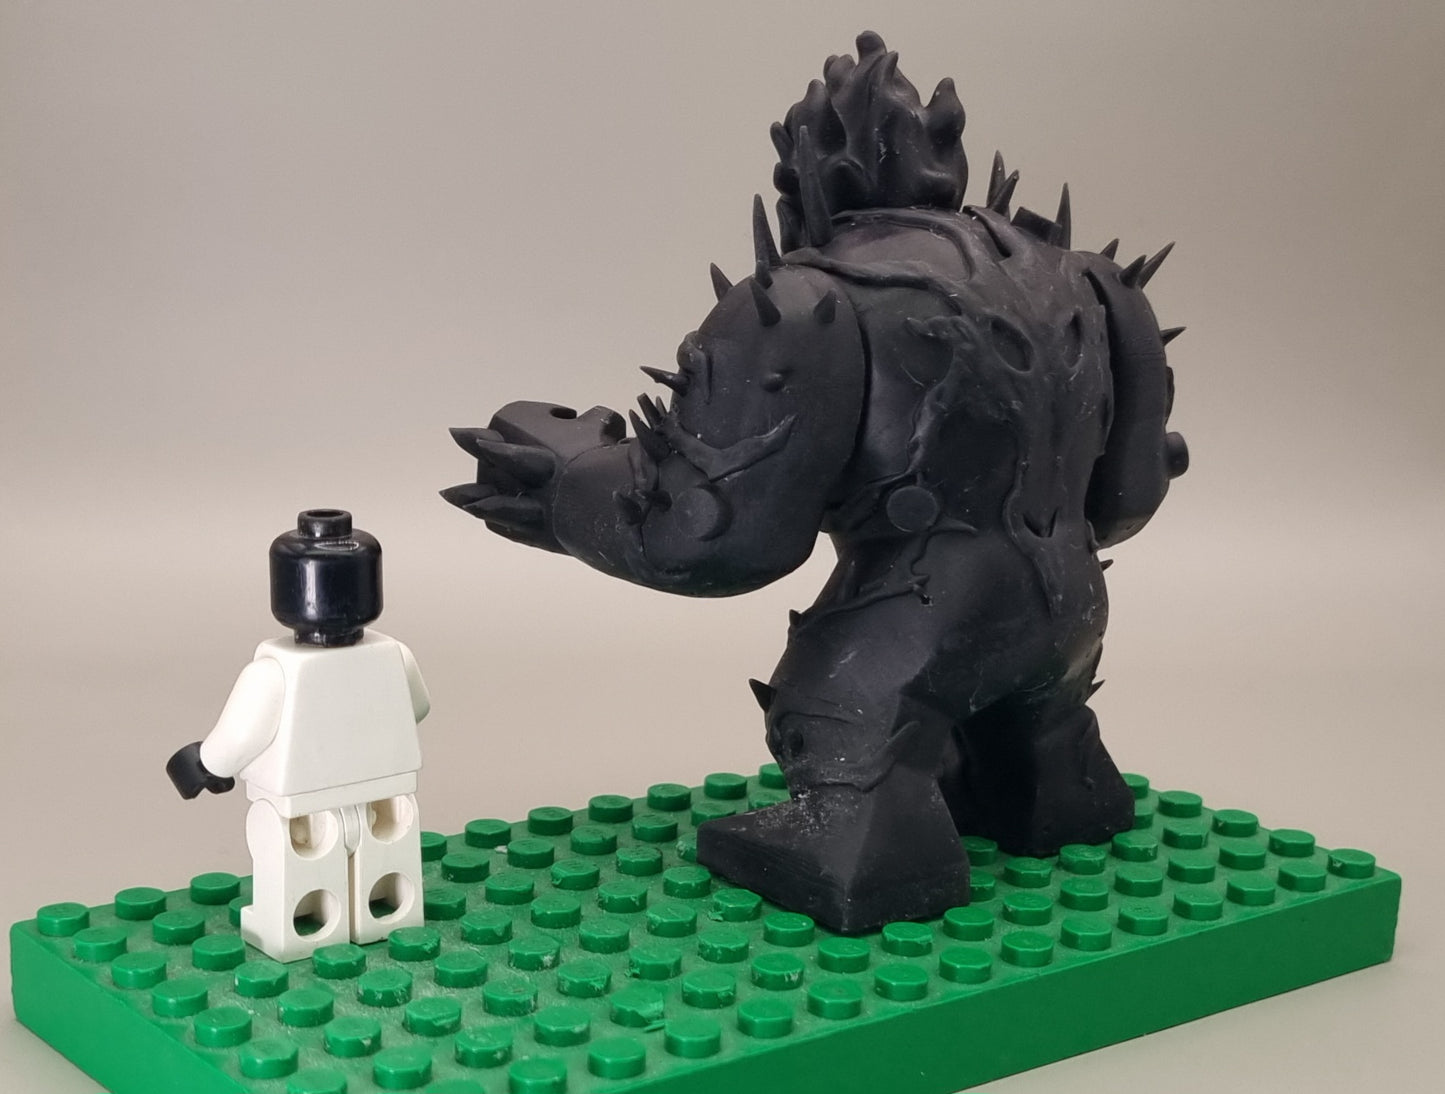 Building toy custom 3D printed super hero flaming head bigfig!